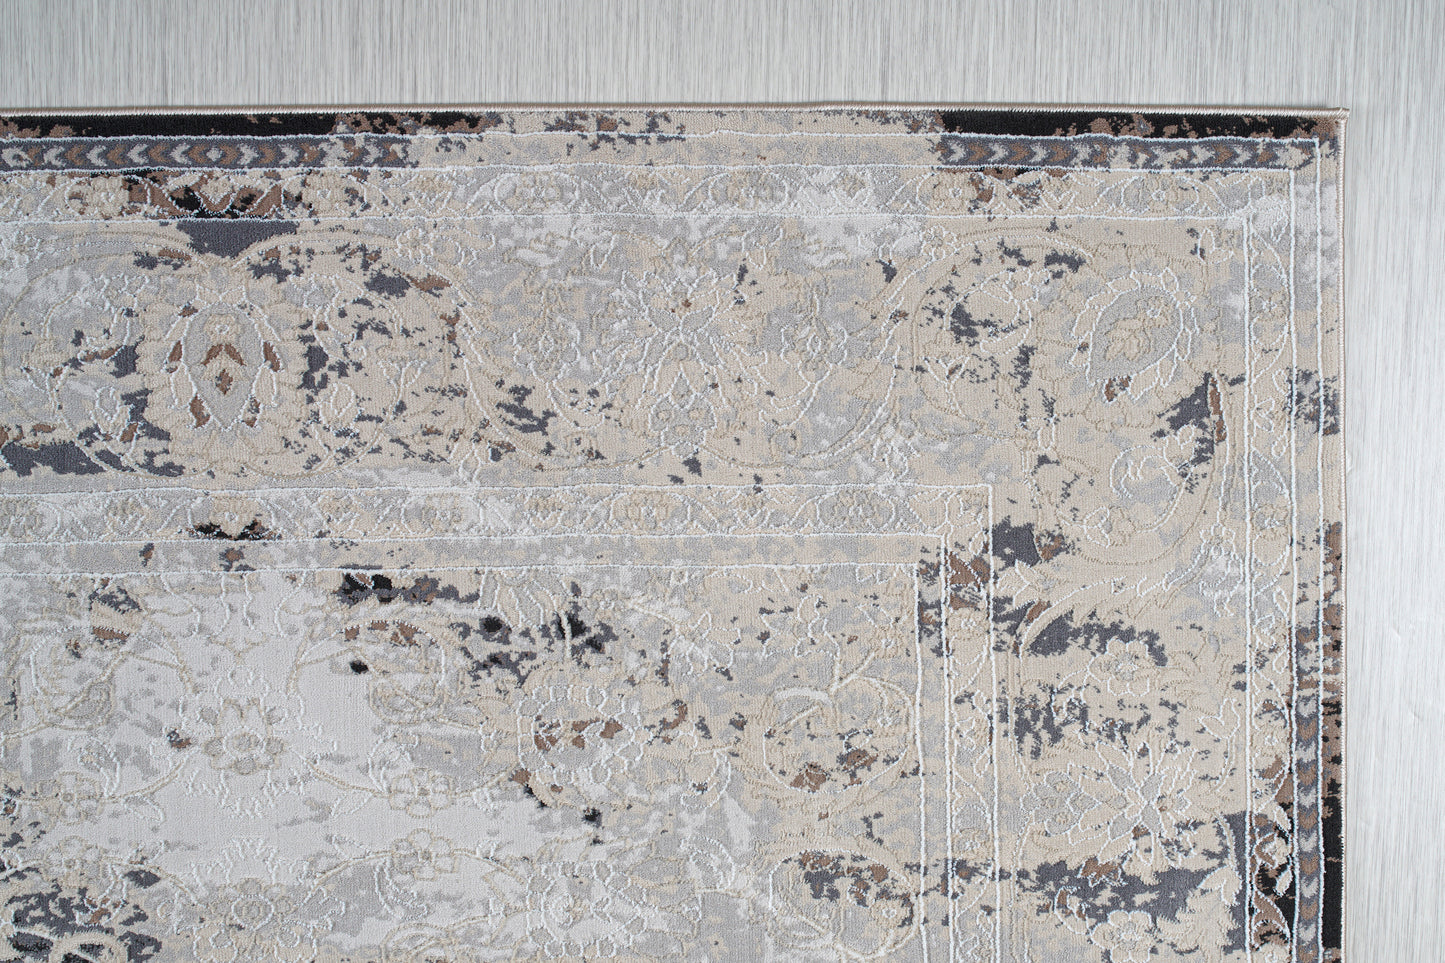 quadro grey ivory brown rustic modern persian area rug 9x12, 10x13 ft Large Big Carpet, Living Room, Beroom